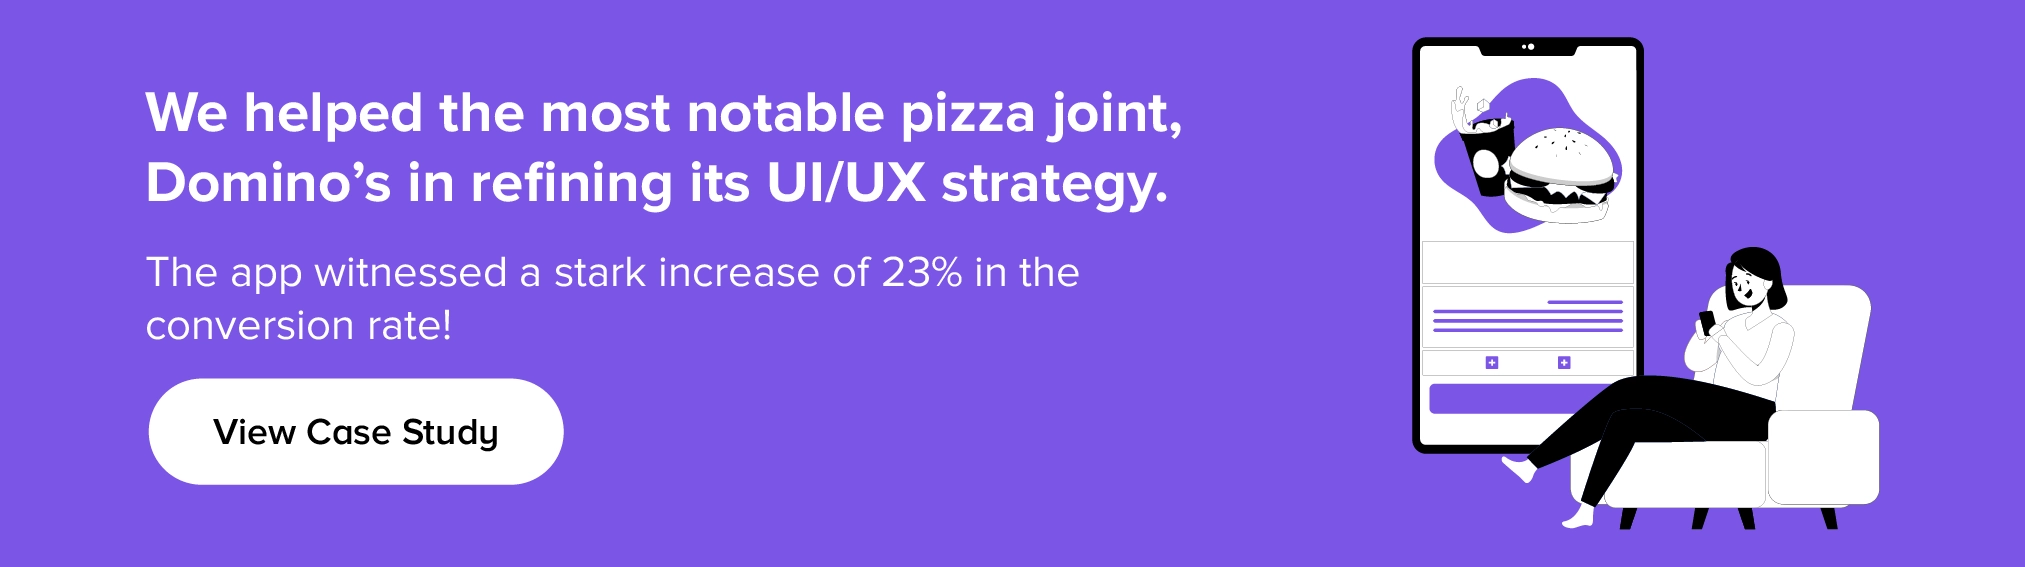 Cara kami berkolaborasi dengan Domino's untuk menyempurnakan strategi UI/UX-nya.